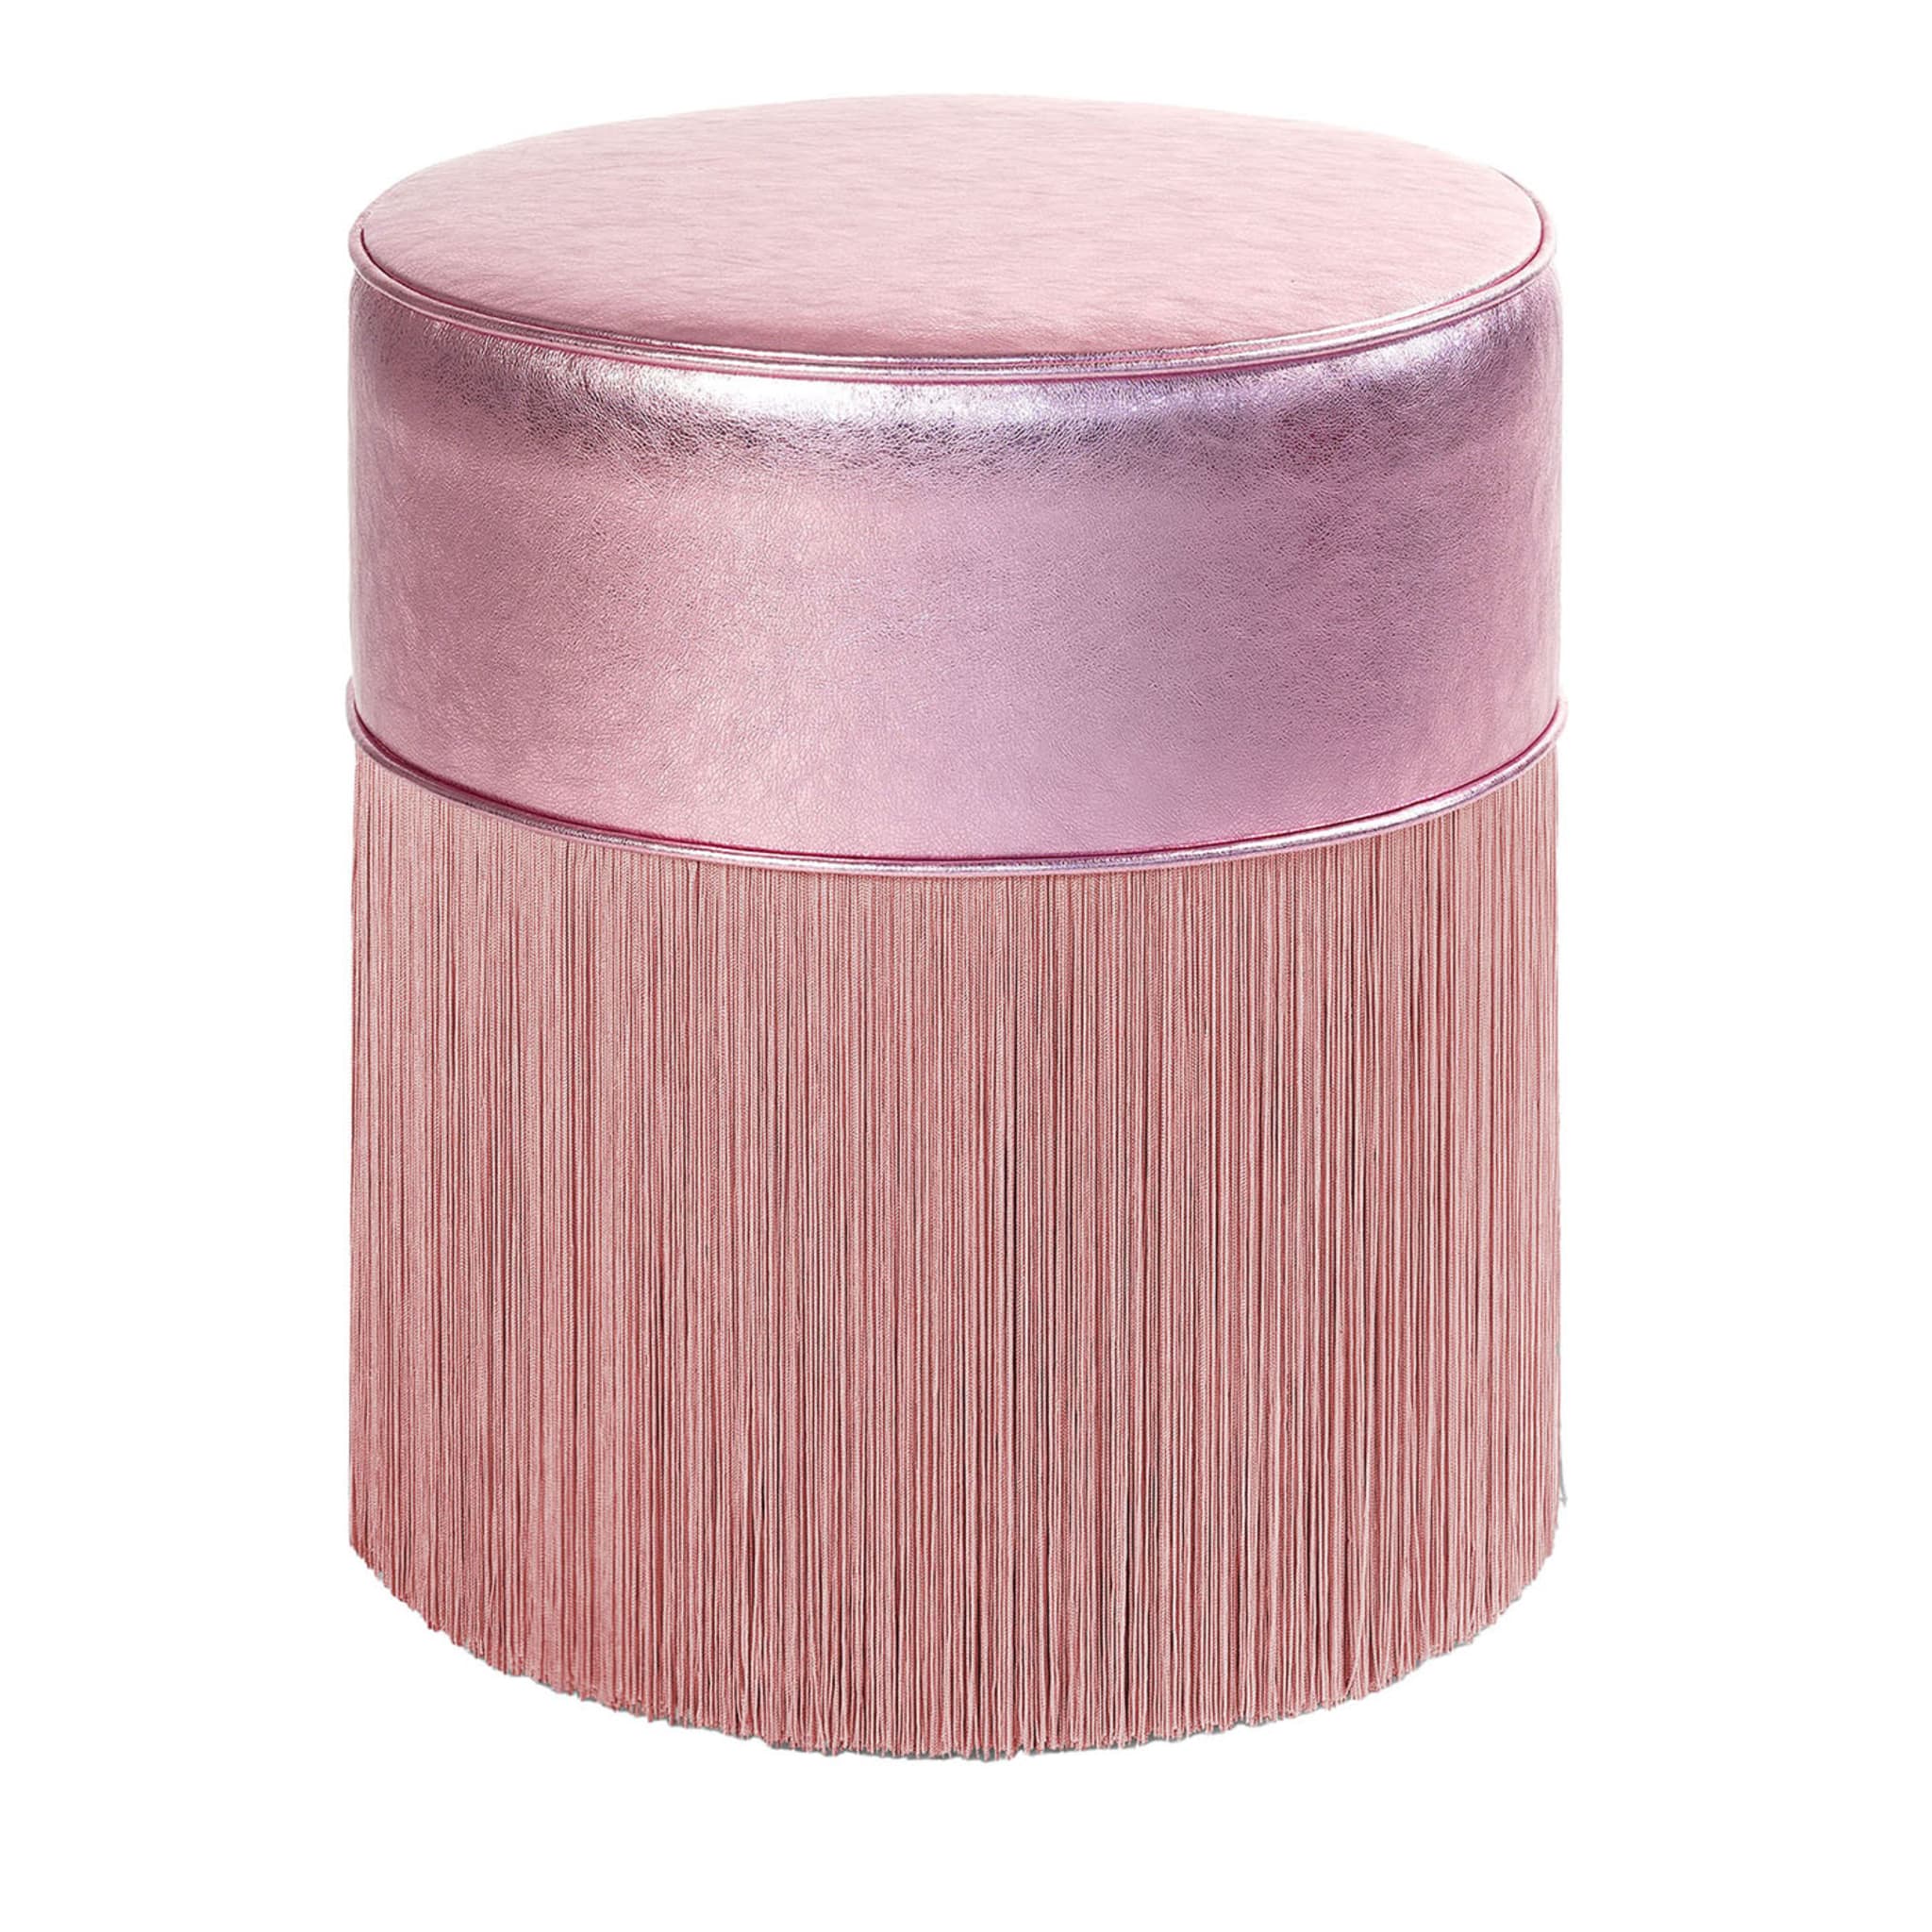 Puf de piel metalizada rosa brillante nº 2 de Lorenza Bozzoli - Vista principal